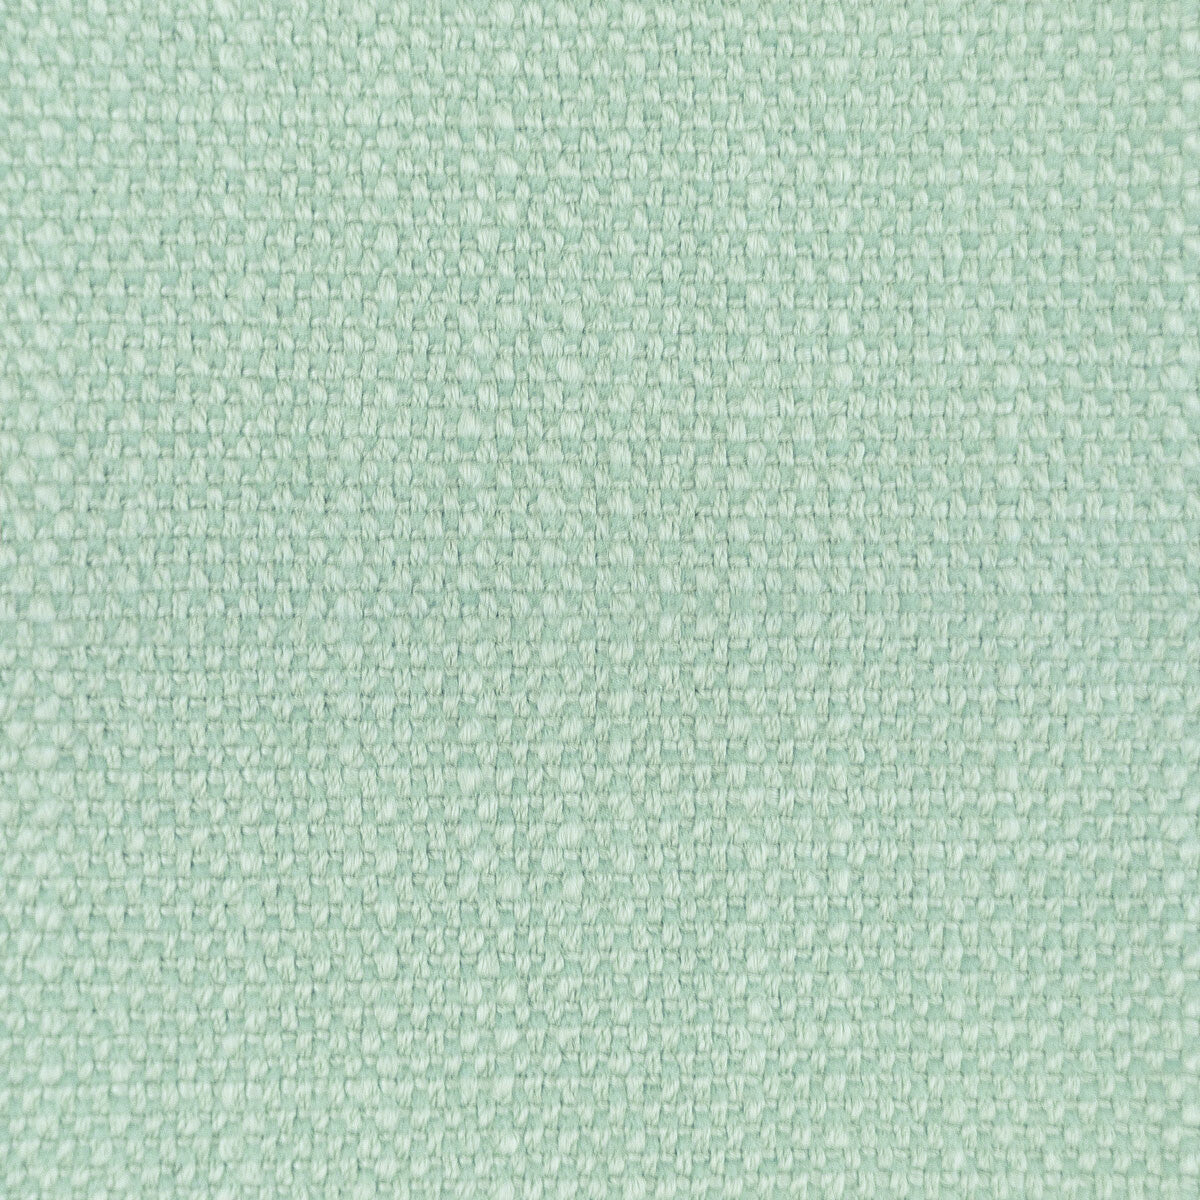 Hugo fabric in verde agua color - pattern LCT1053.014.0 - by Gaston y Daniela in the Lorenzo Castillo VI collection